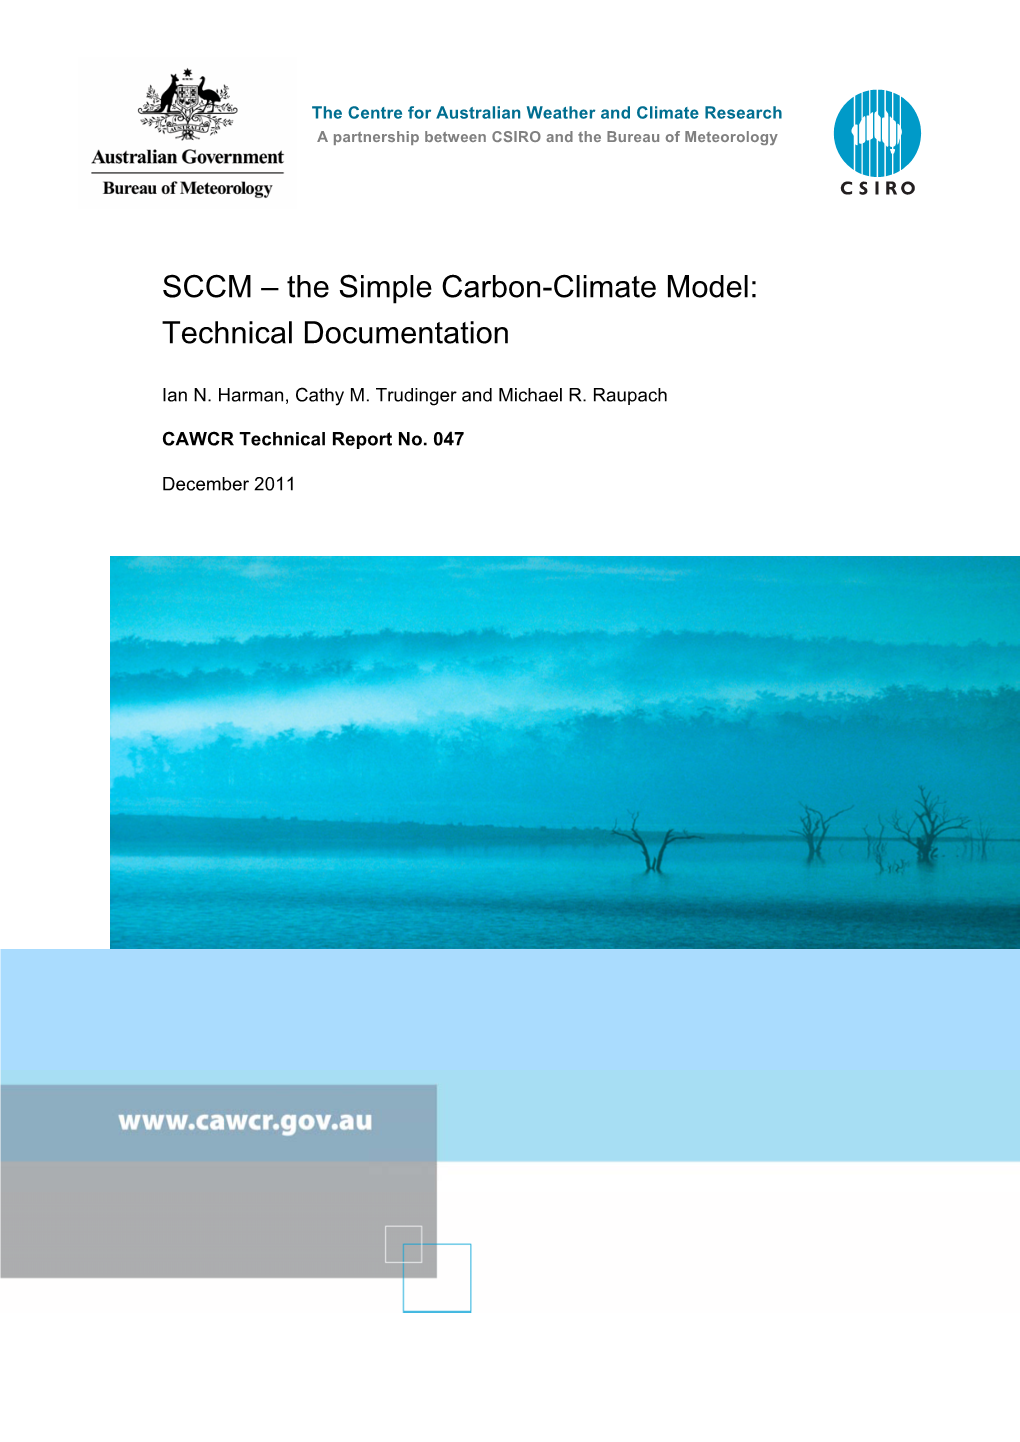 SCCM – the Simple Carbon-Climate Model: Technical Documentation